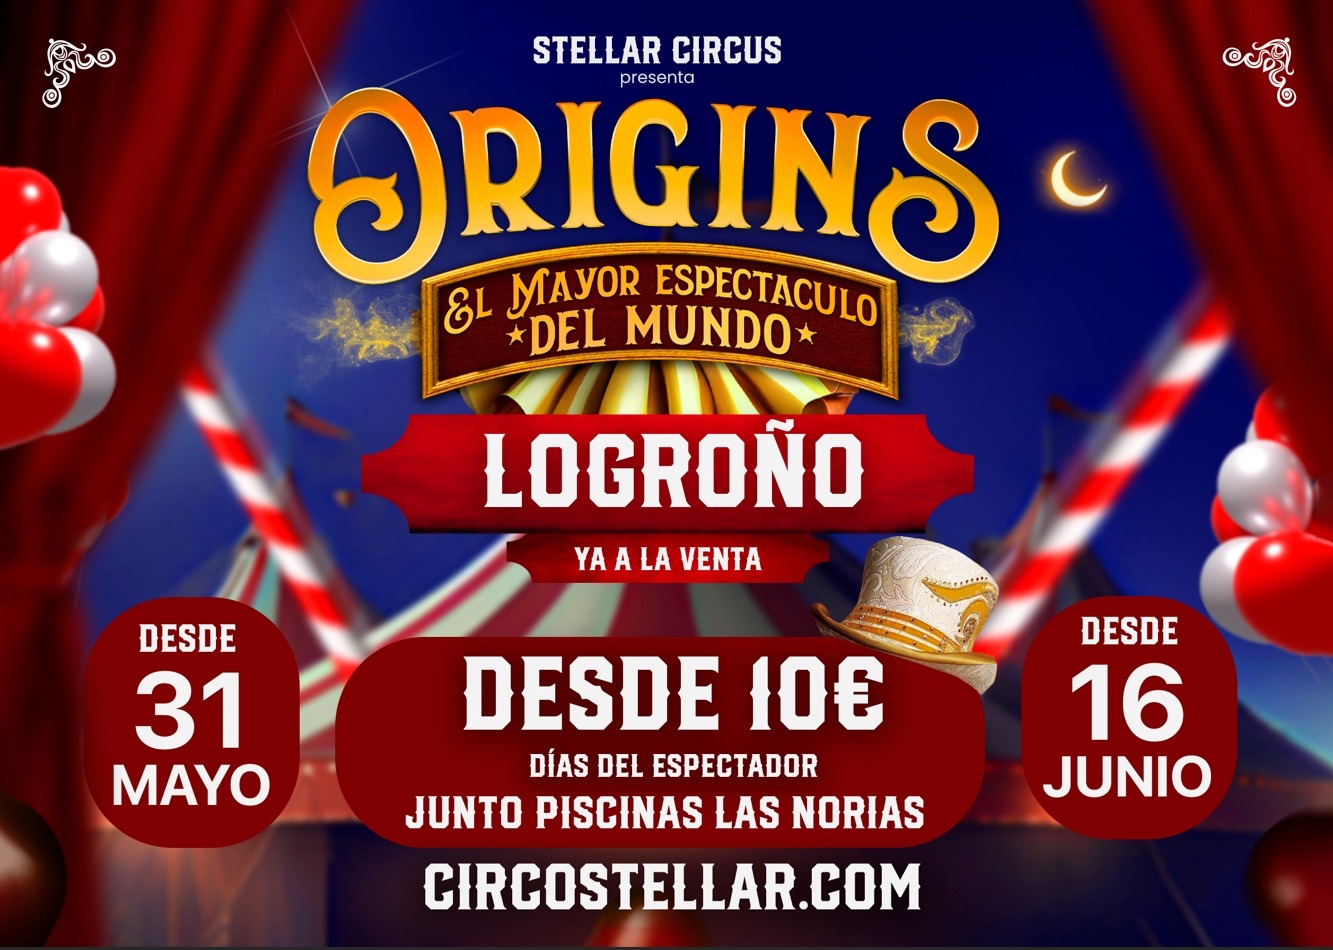 Circo Stellar Logrono Origins